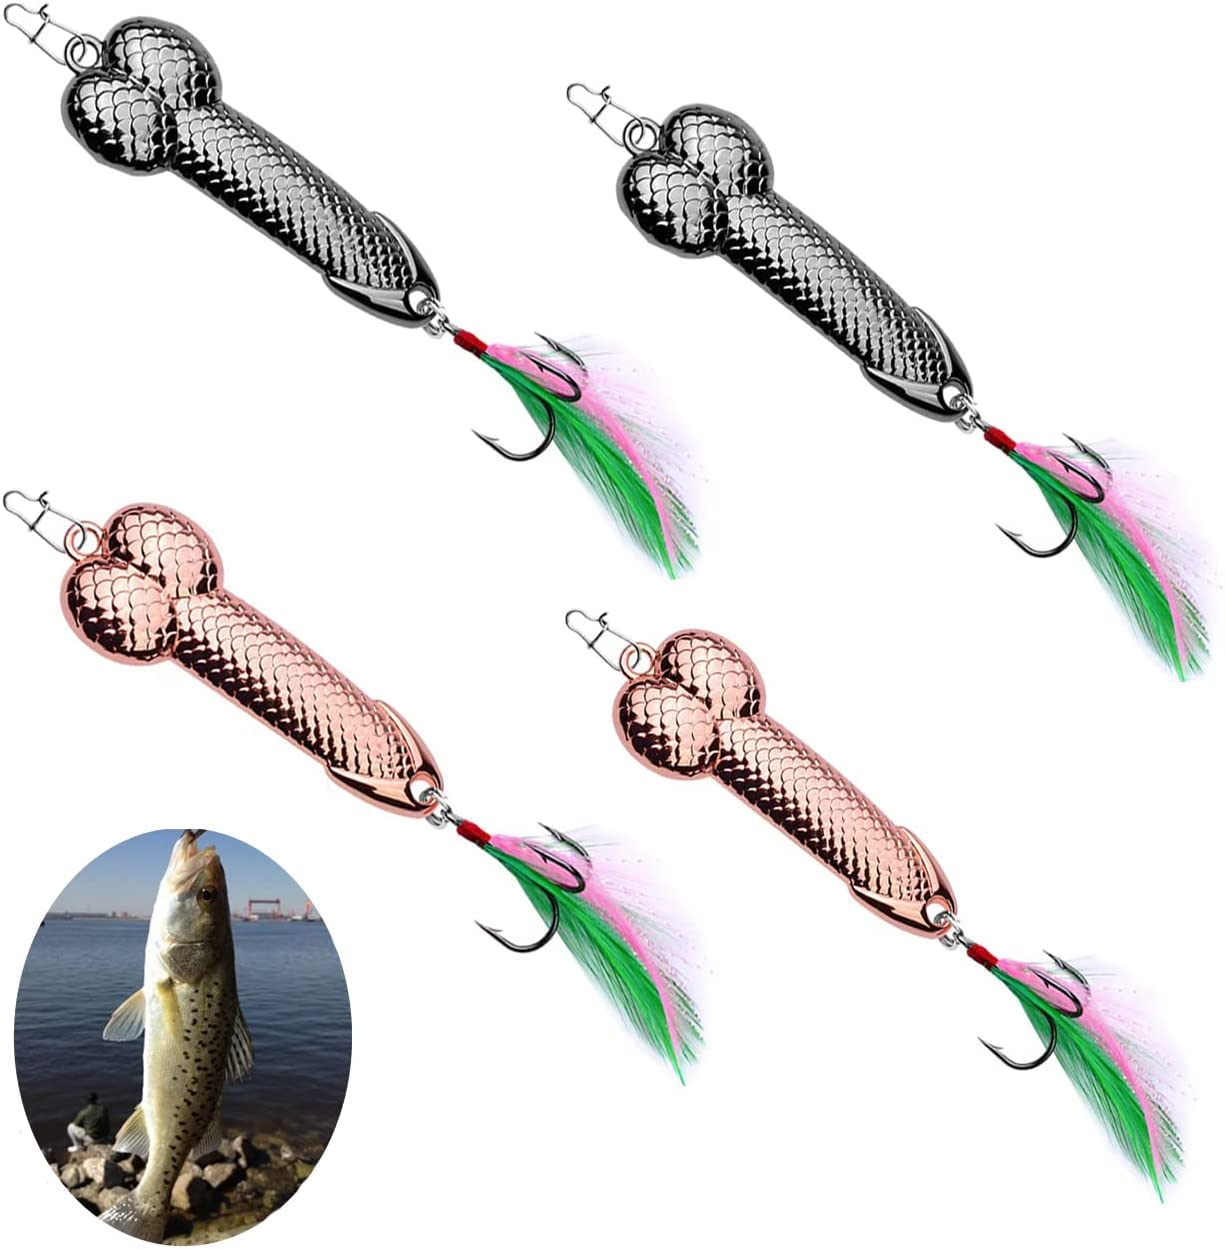 BODLYL 4PCS Fishing Lures, Metal Jigs Spoon Lure, Sequin Fishing